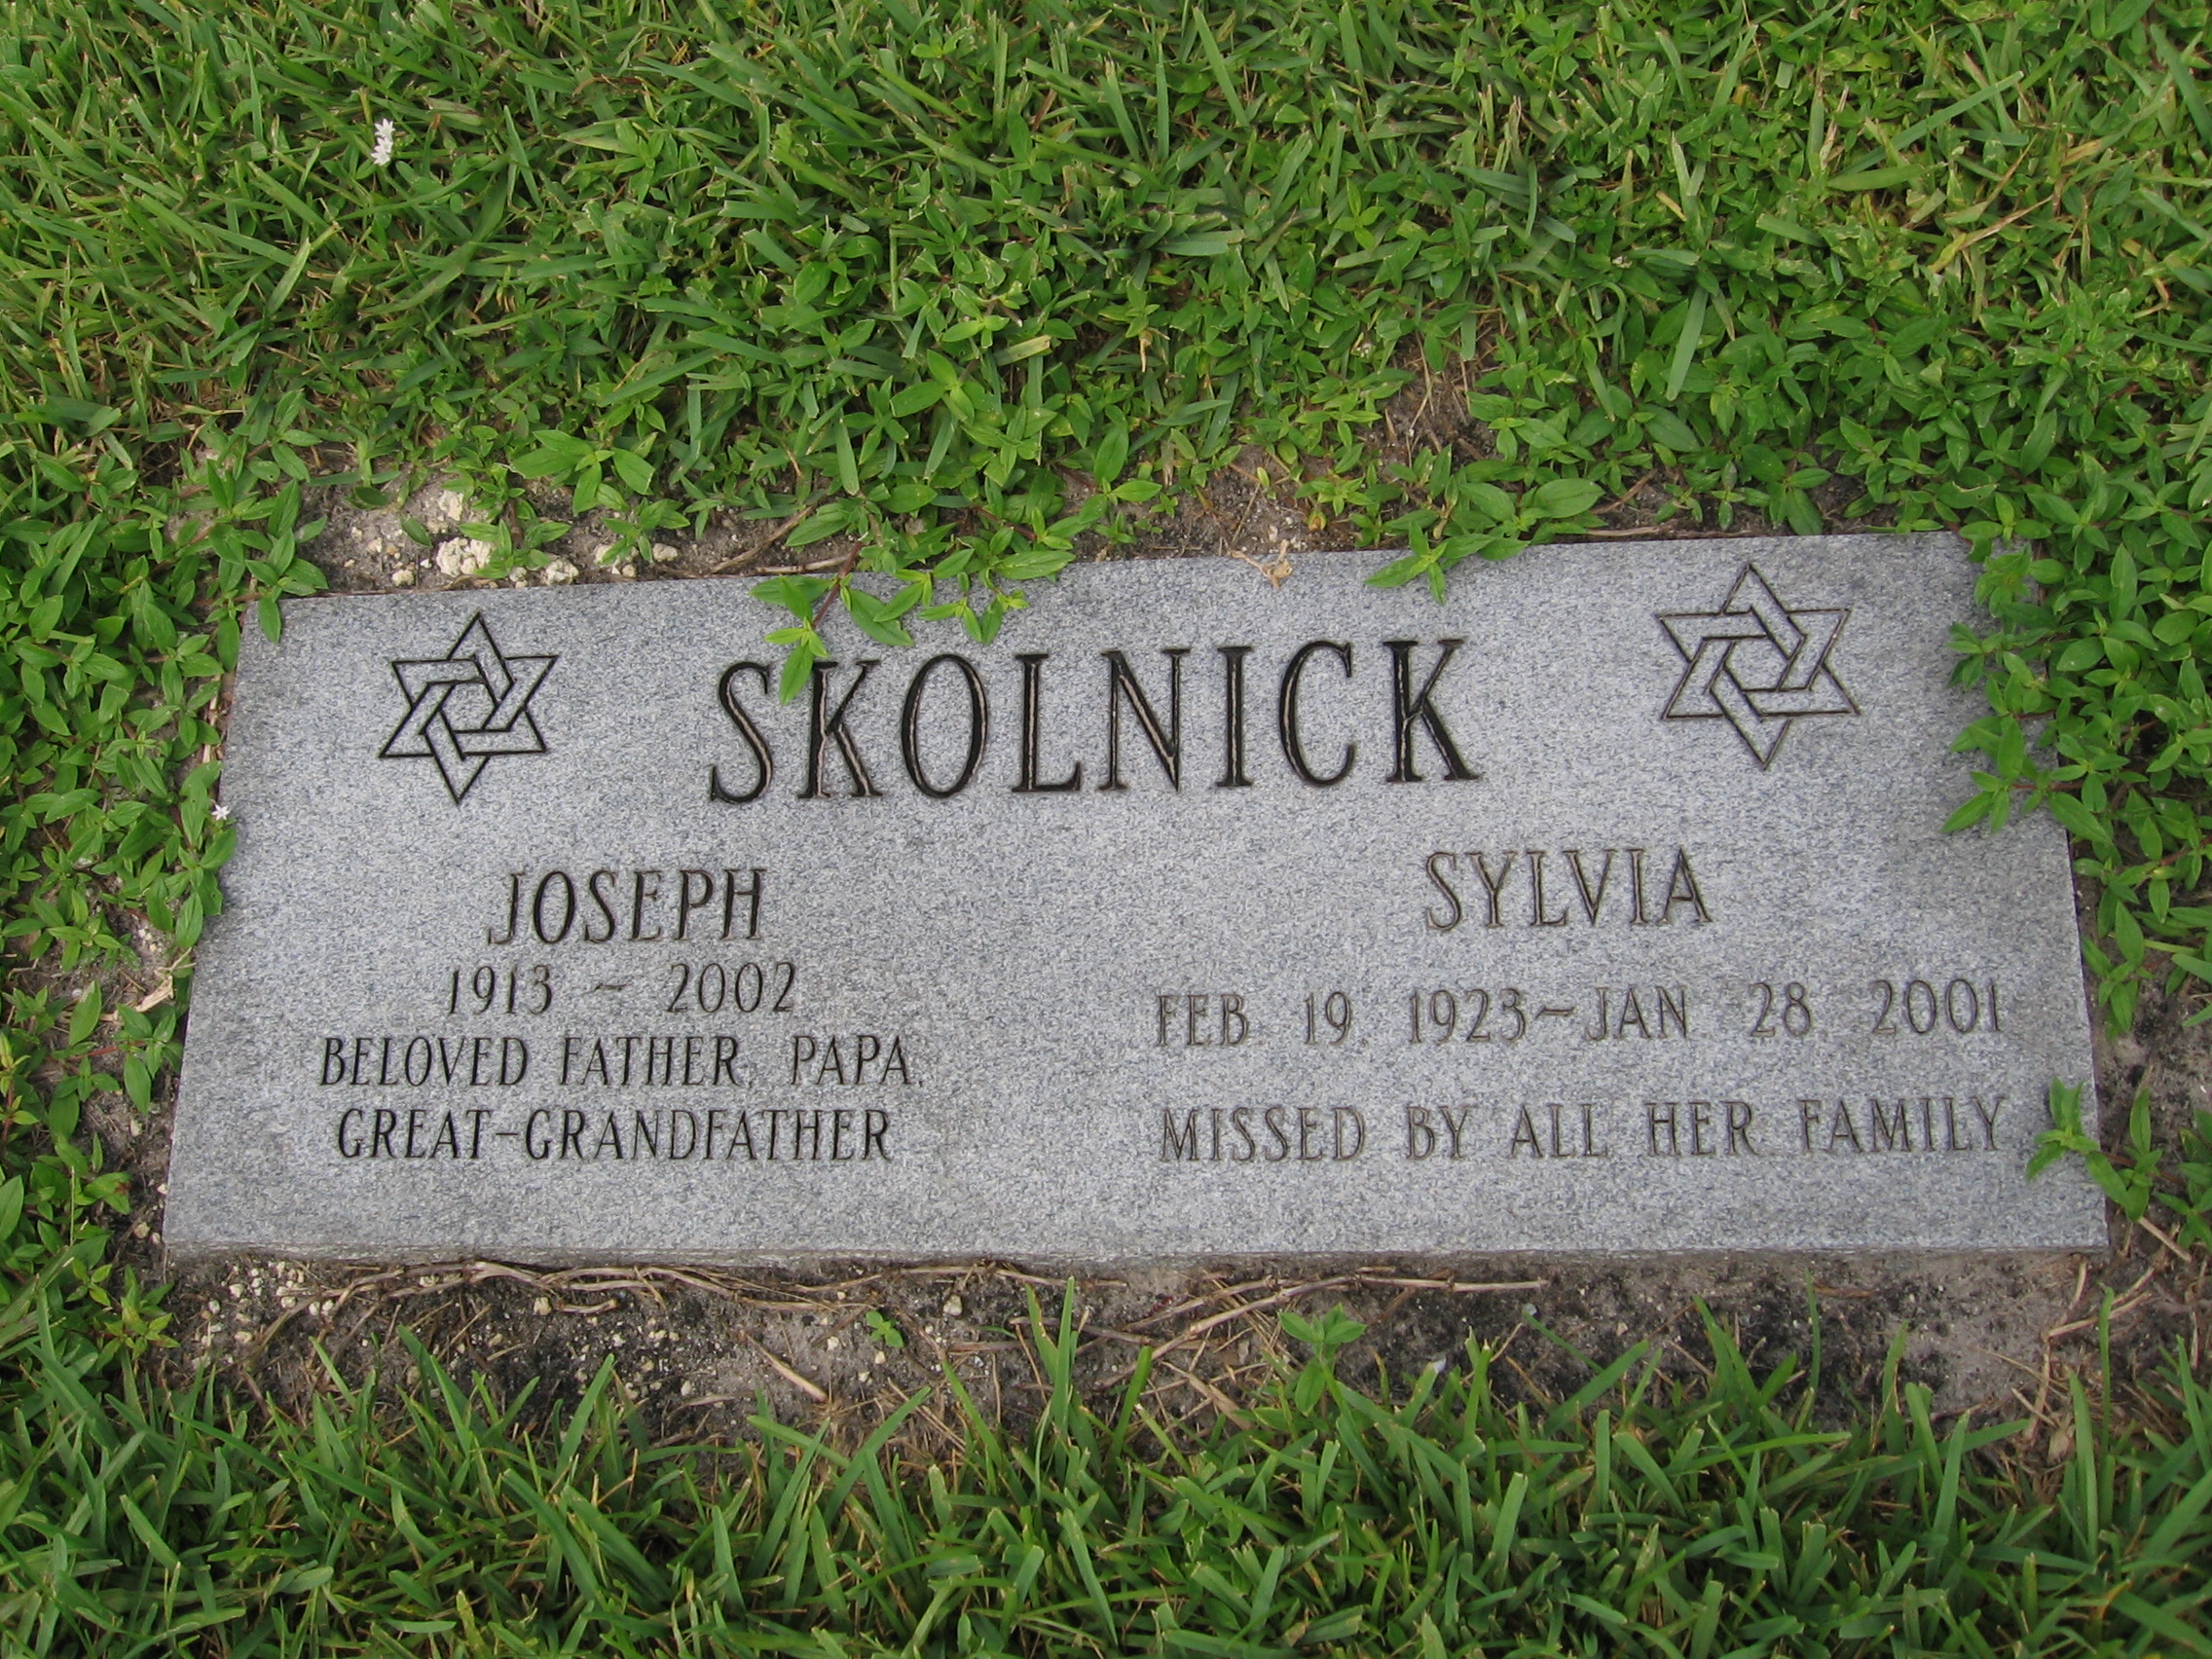 Joseph Skolnick